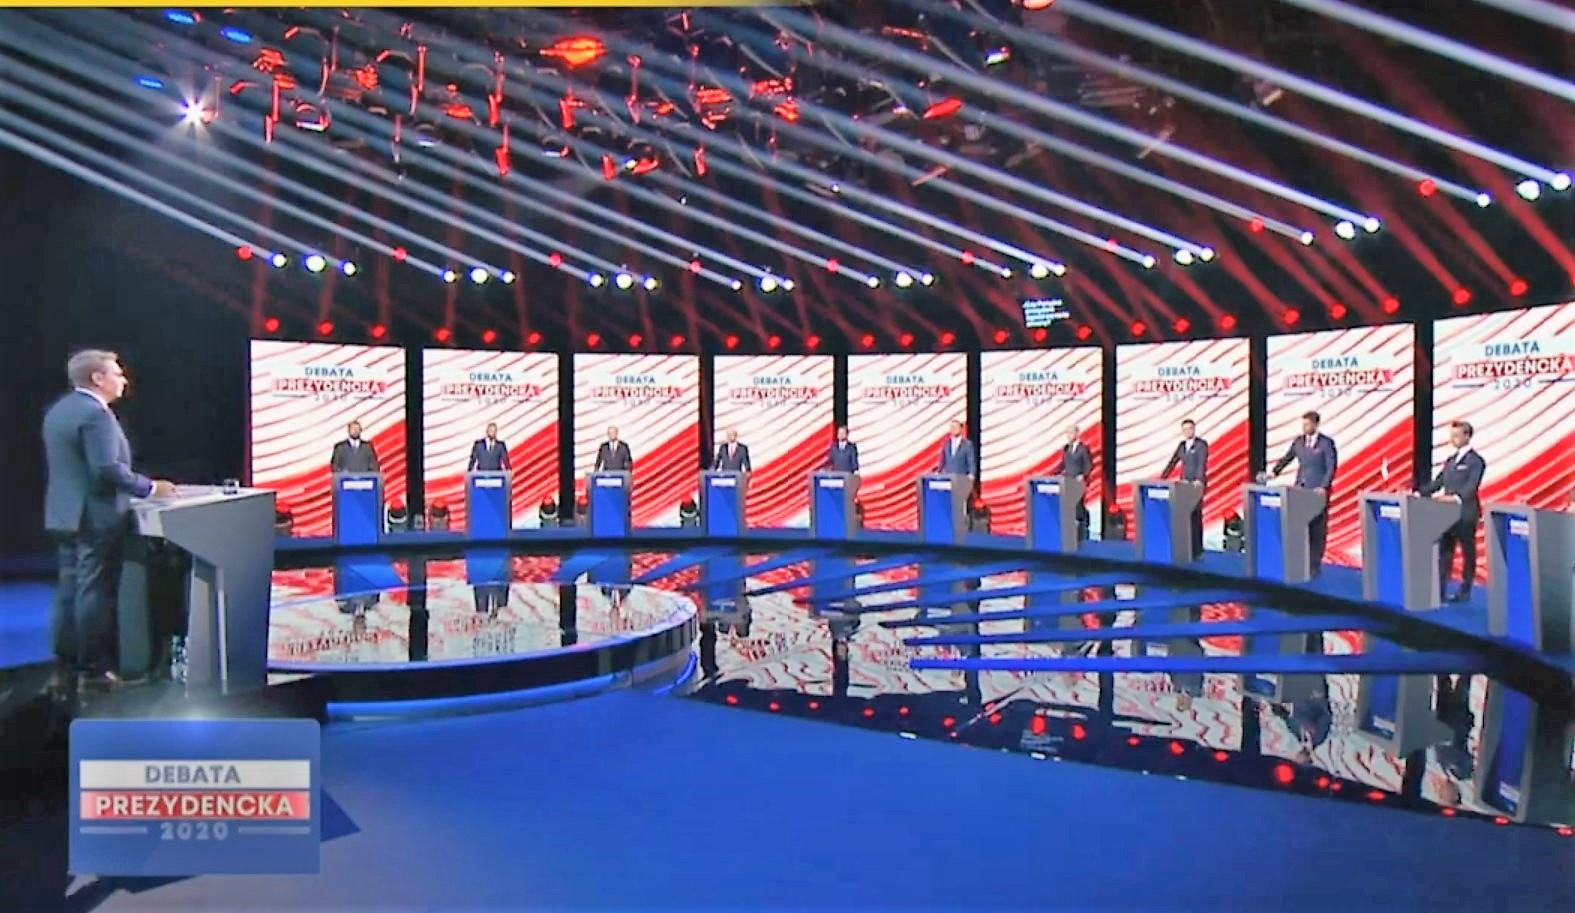 Debata prezydencka TVP - prowadzący i kandydaci